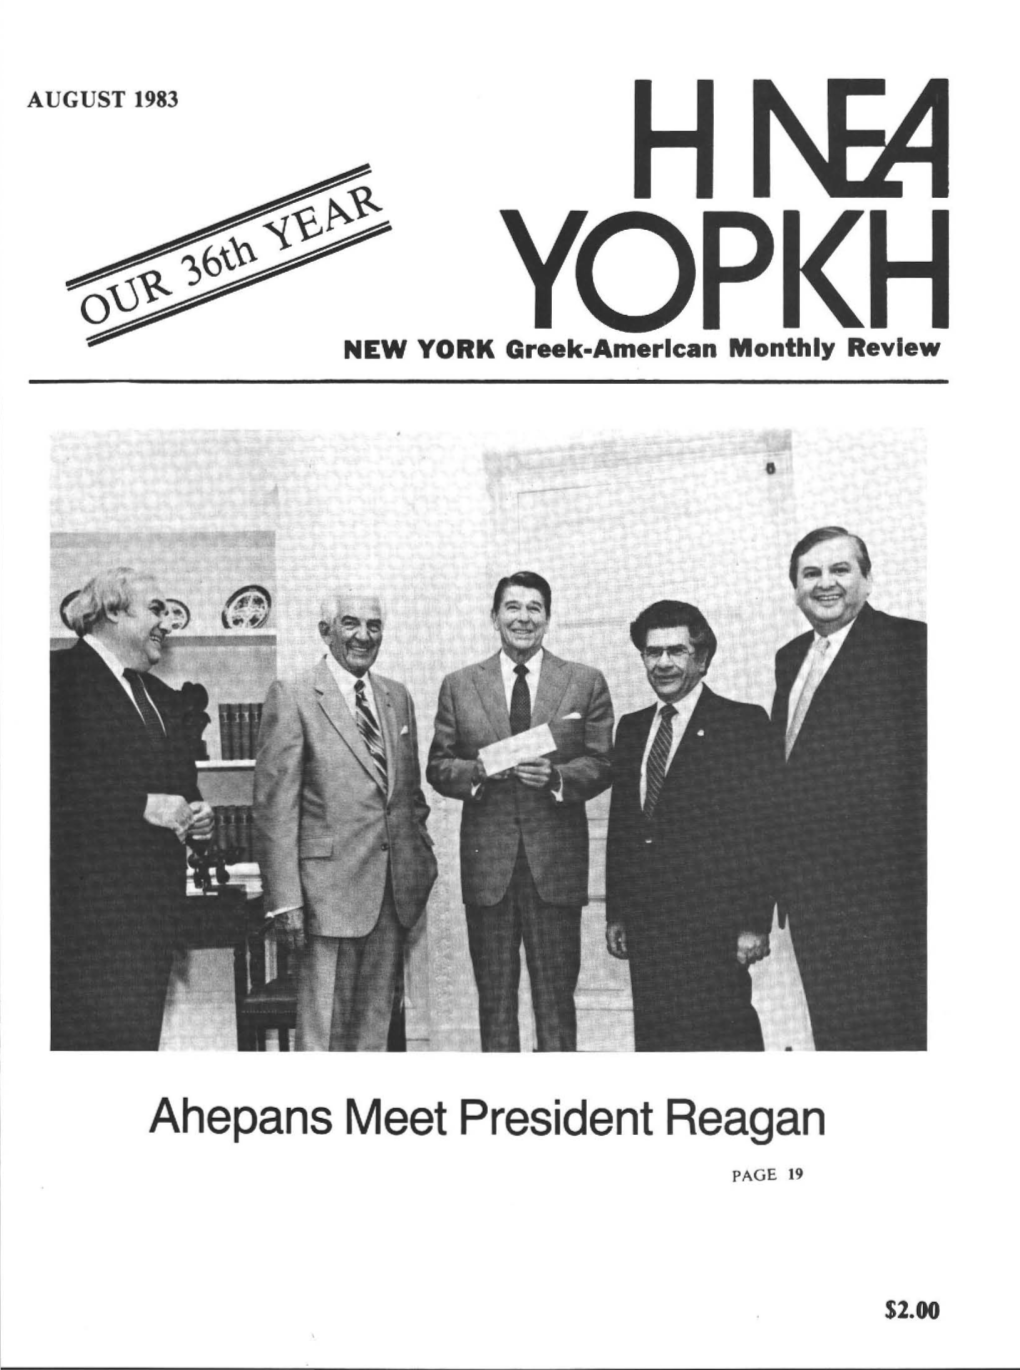 Ahepans Meet President Reagan